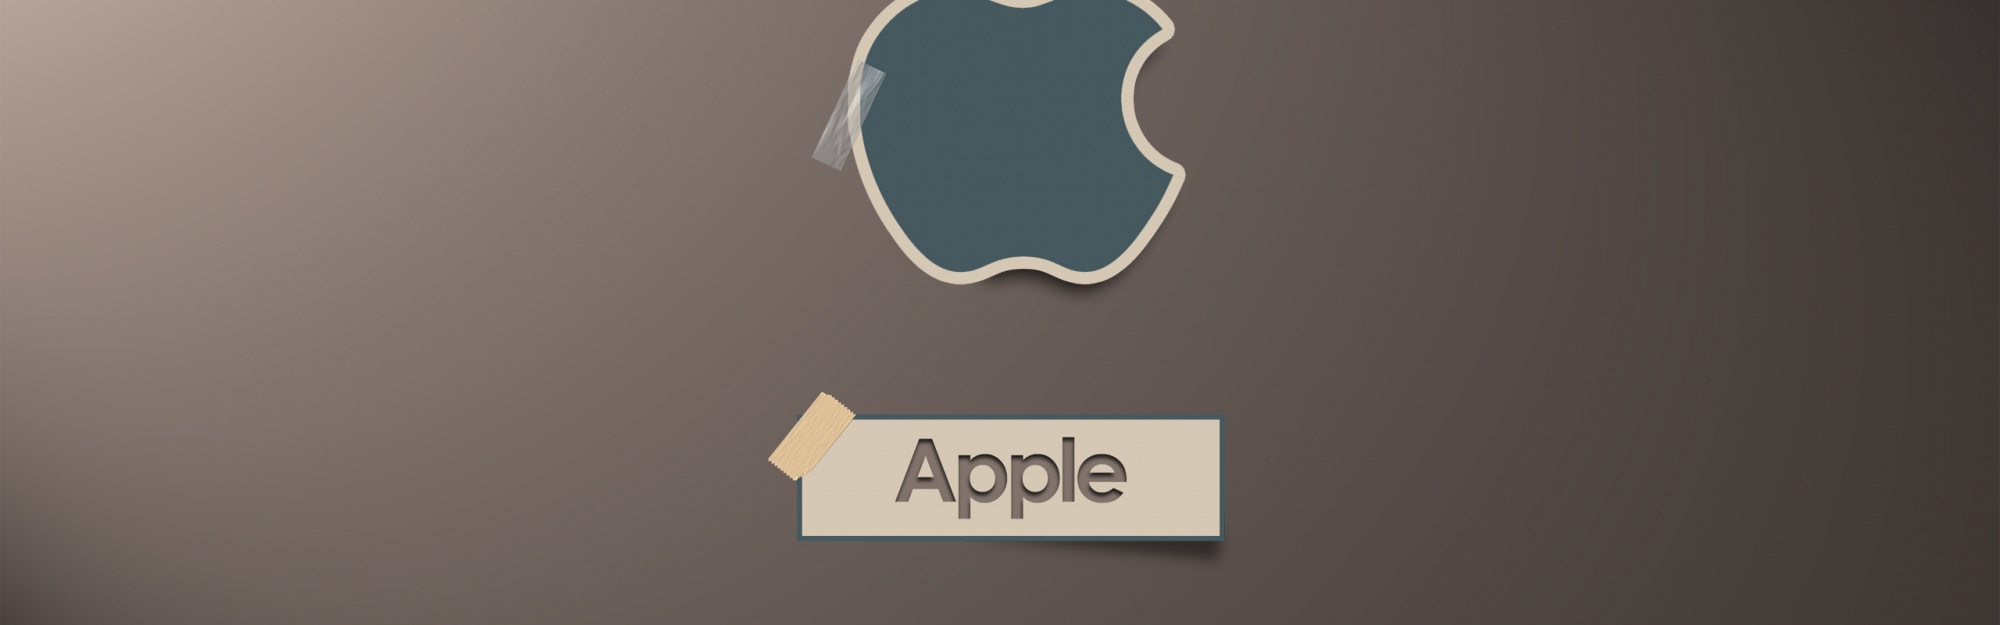 Apple Logo Scotch Tape Computer